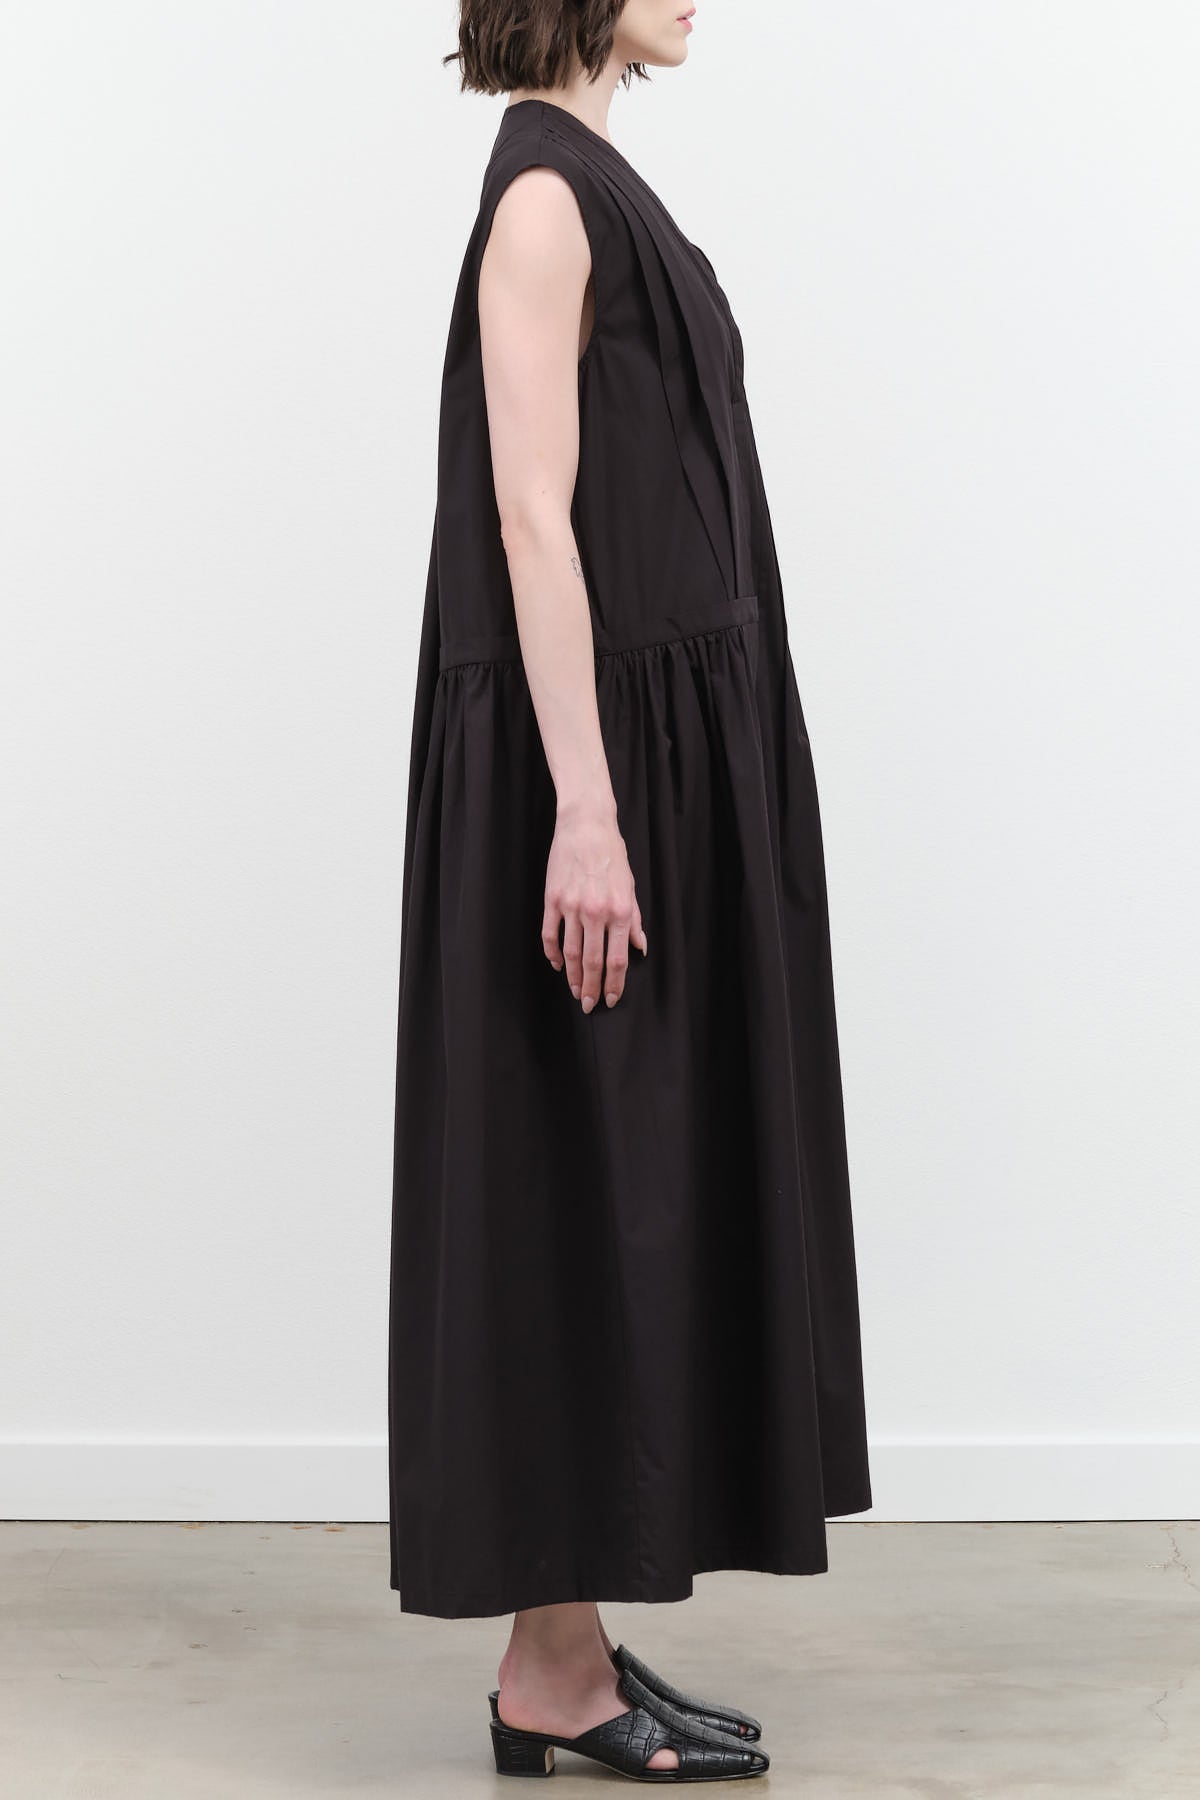 Long Black Dress from Christian Wijnants